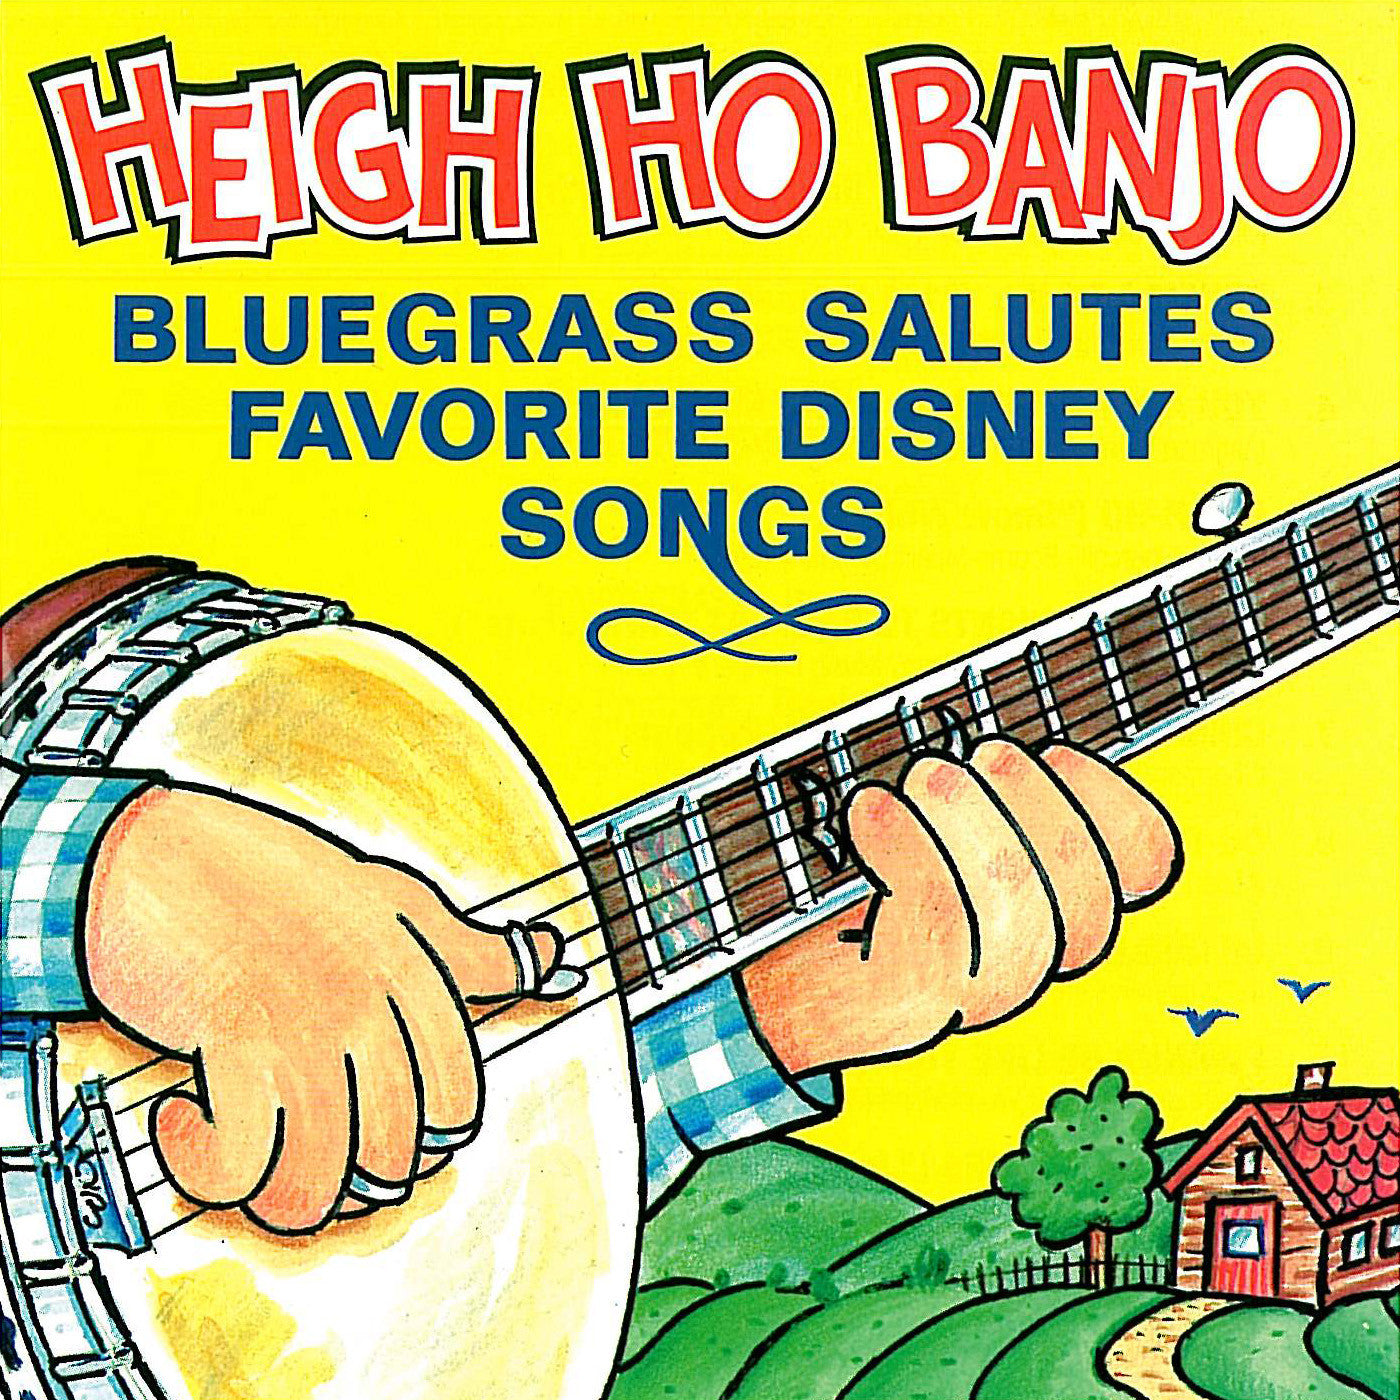 Heigh Ho Banjo: Bluegrass Salutes Favorite Disney Songs